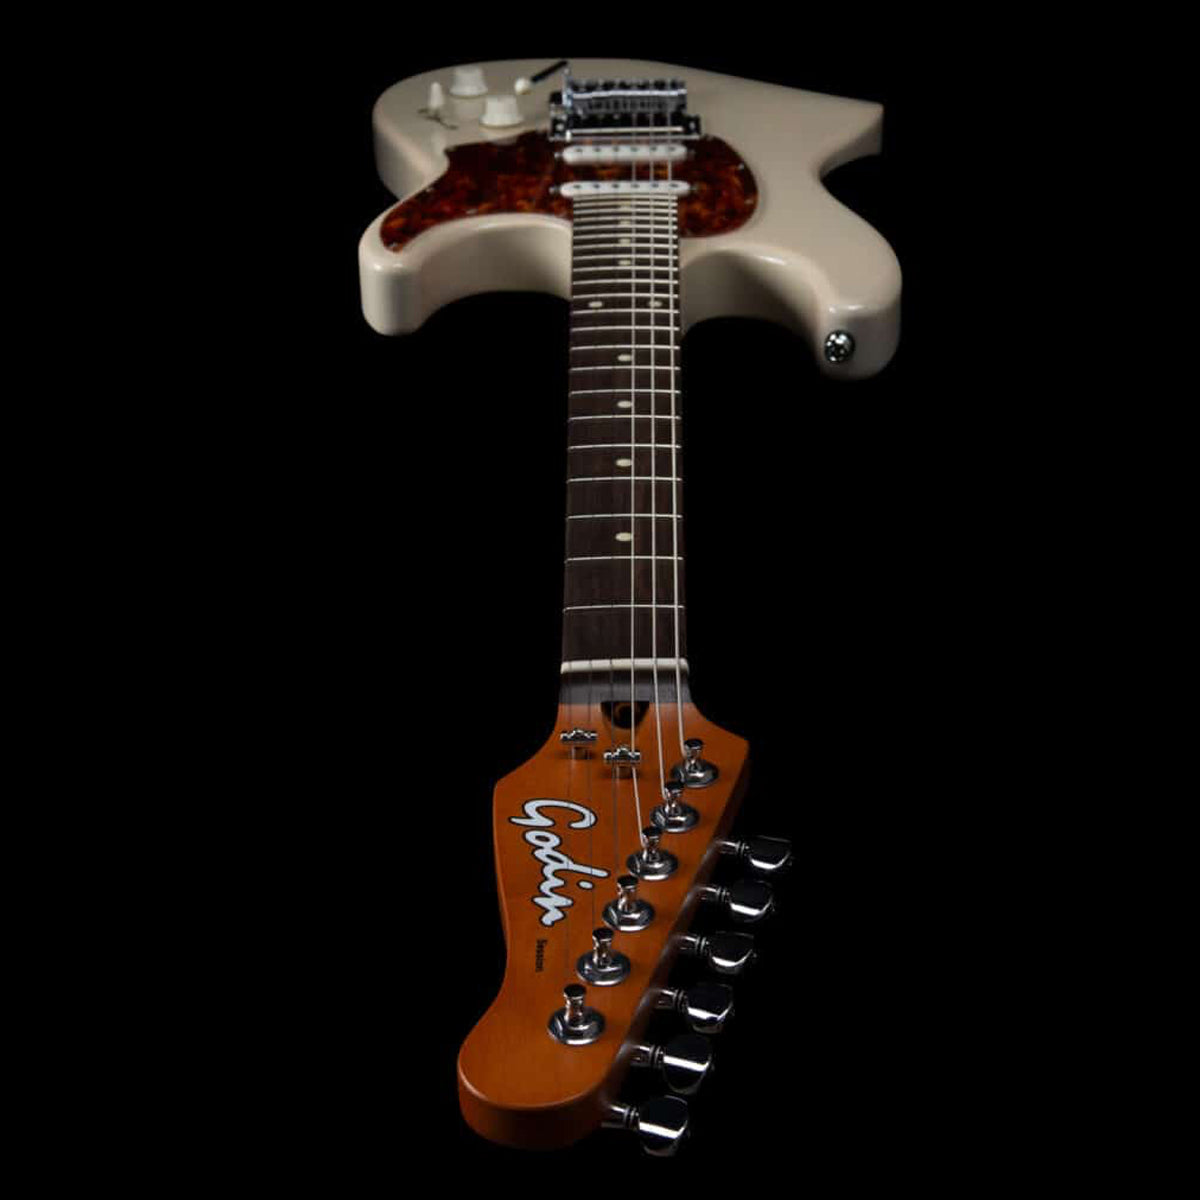 Godin Session T-Pro Electric Guitar ~ Ozark Cream RN, Electric Guitar for sale at Richards Guitars.